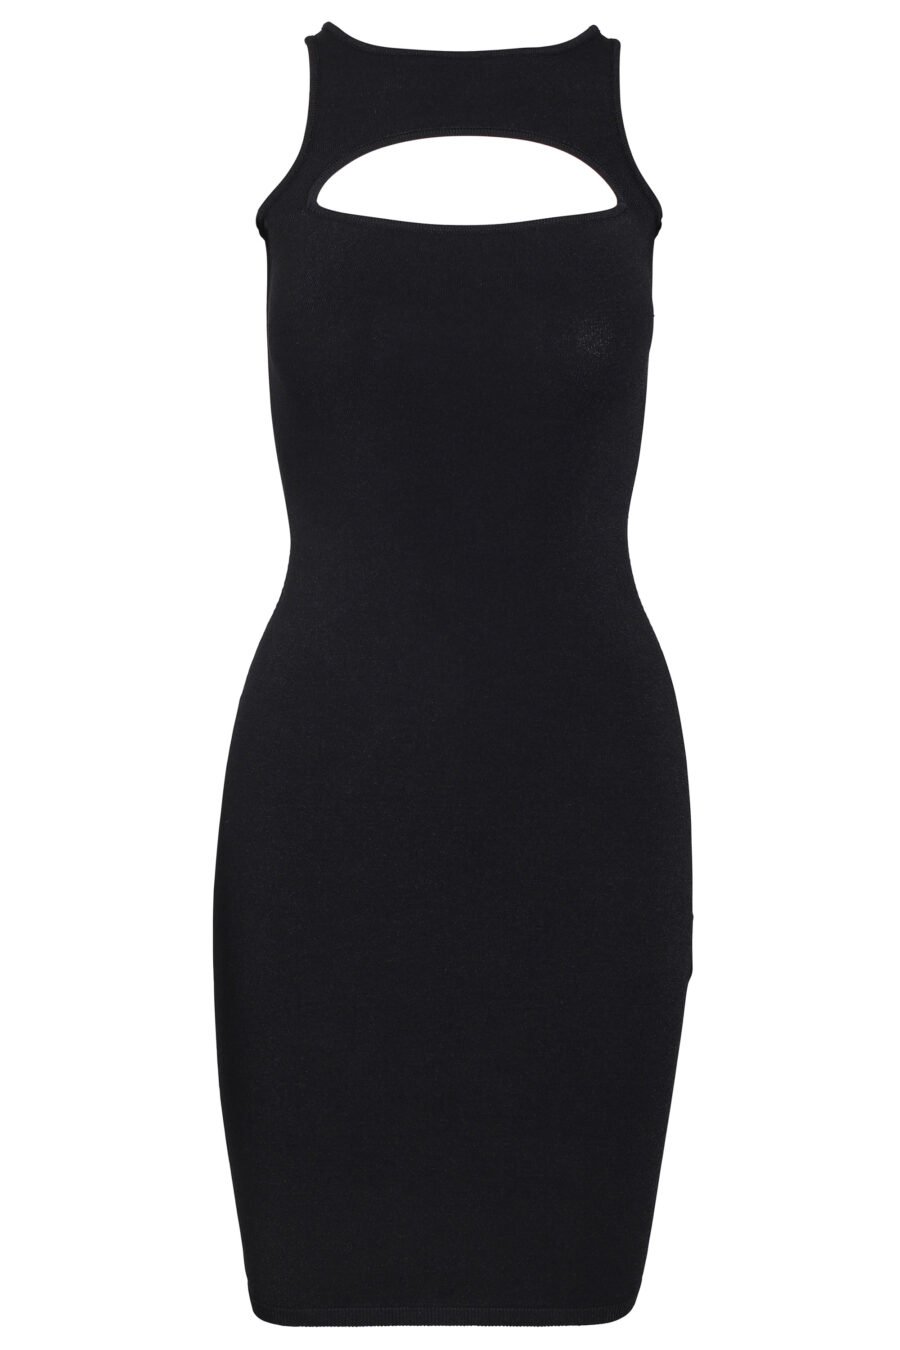 Black dress with slit - IMG 0572